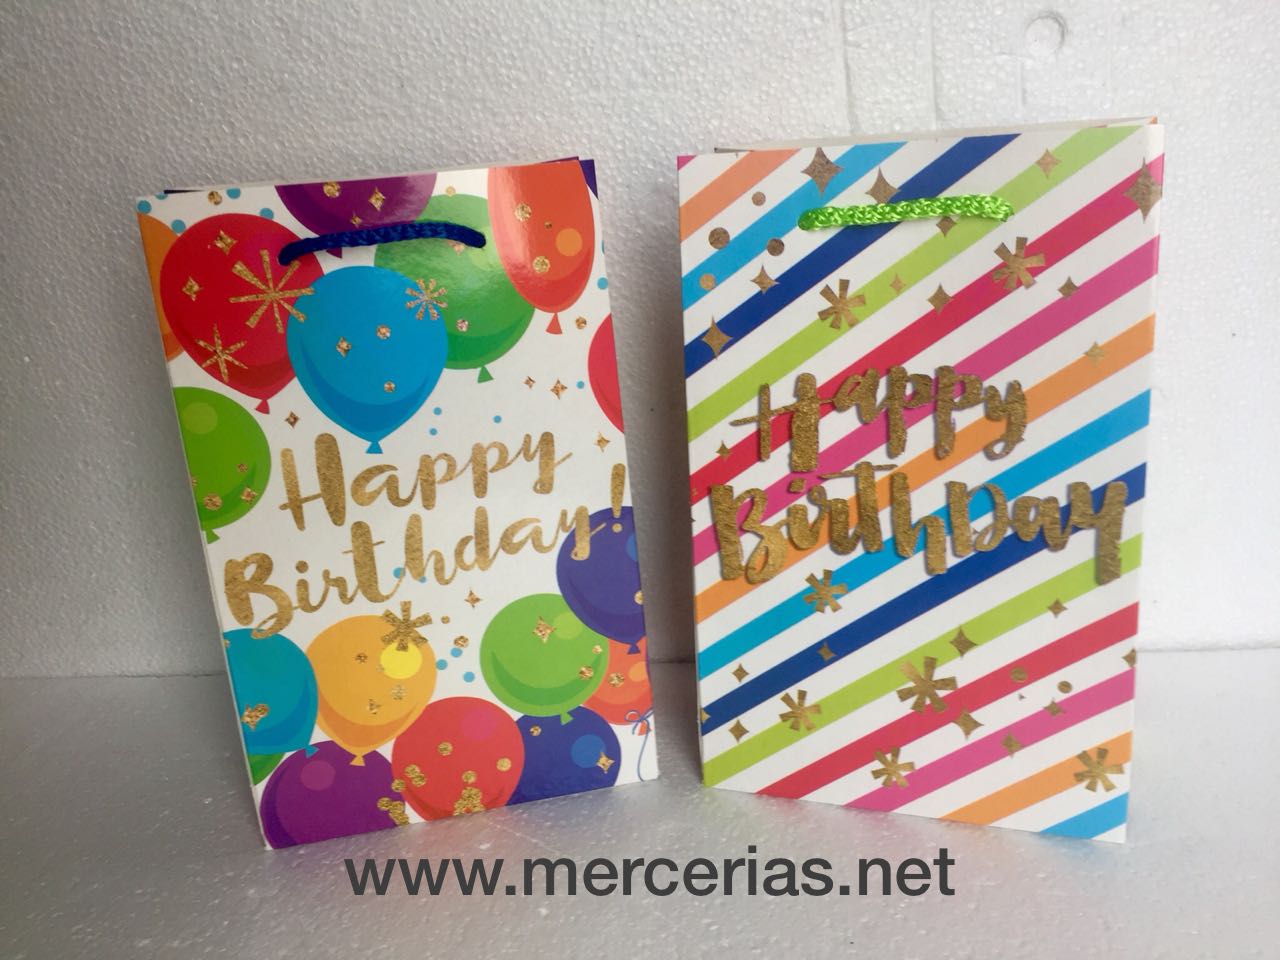 Bolsa para Regalo Feliz Cumpleaños M-4554 - Merceria en Linea